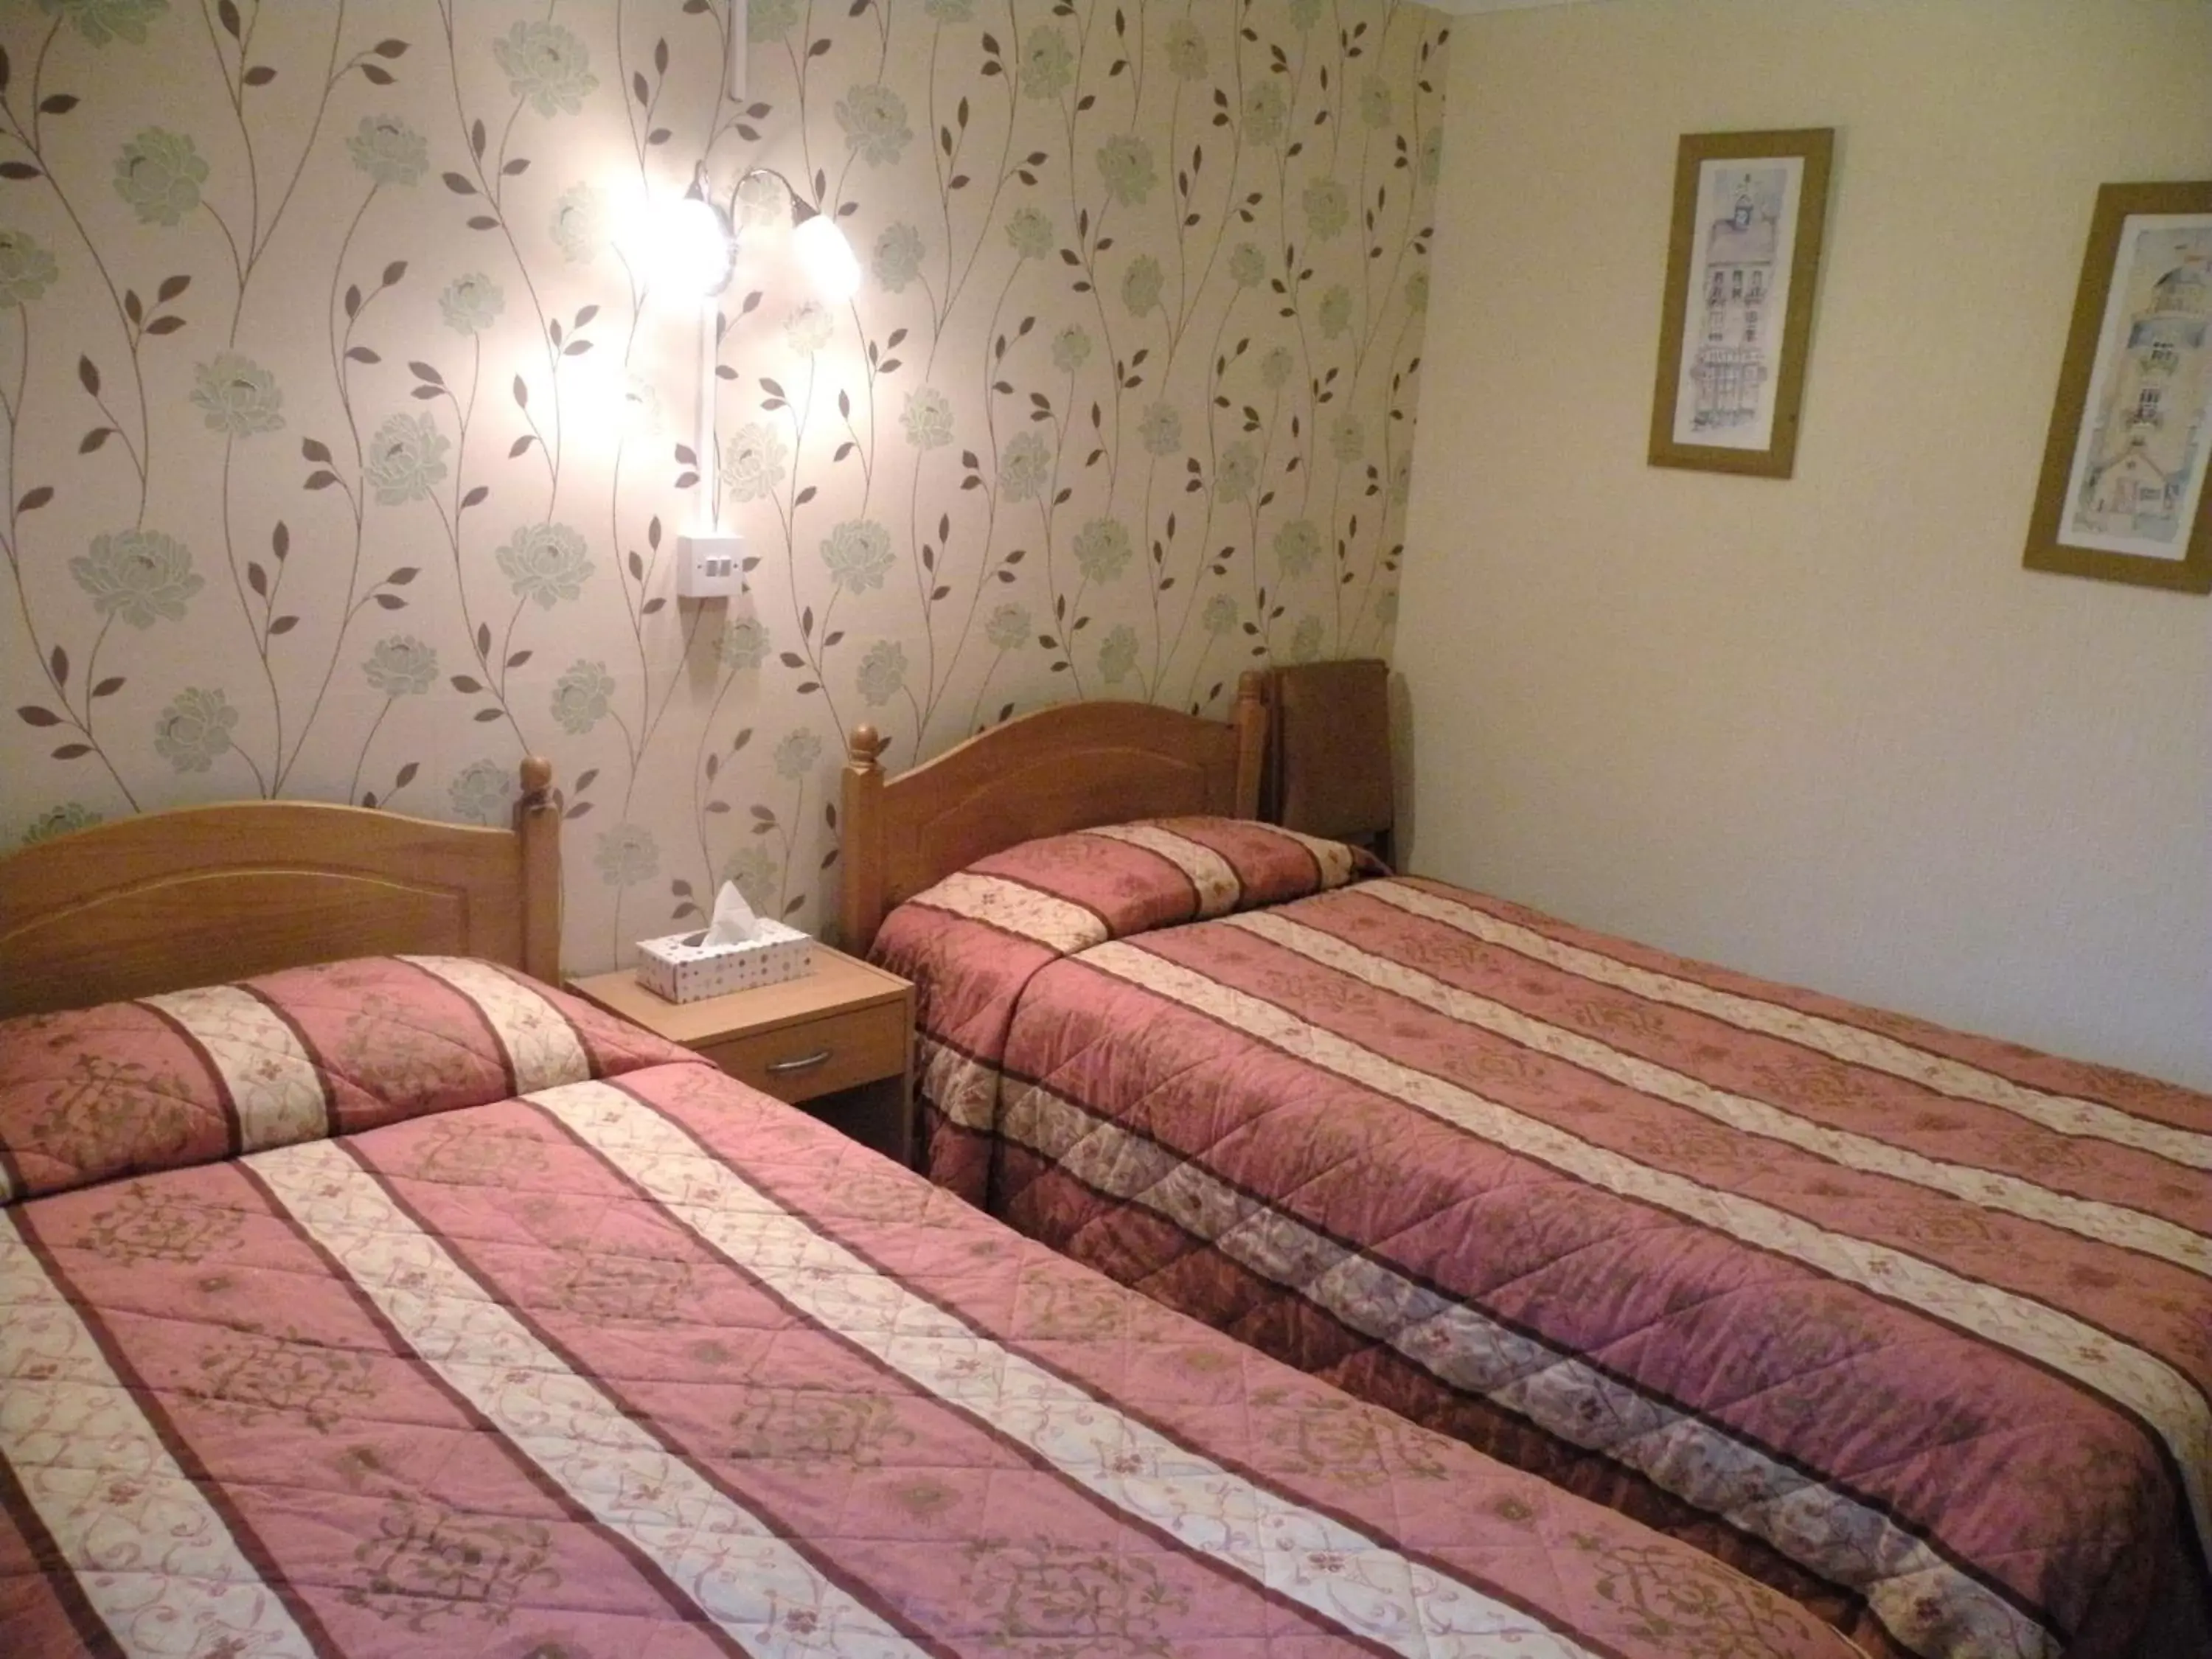 Bedroom, Bed in Dorset Hotel, Isle of Wight